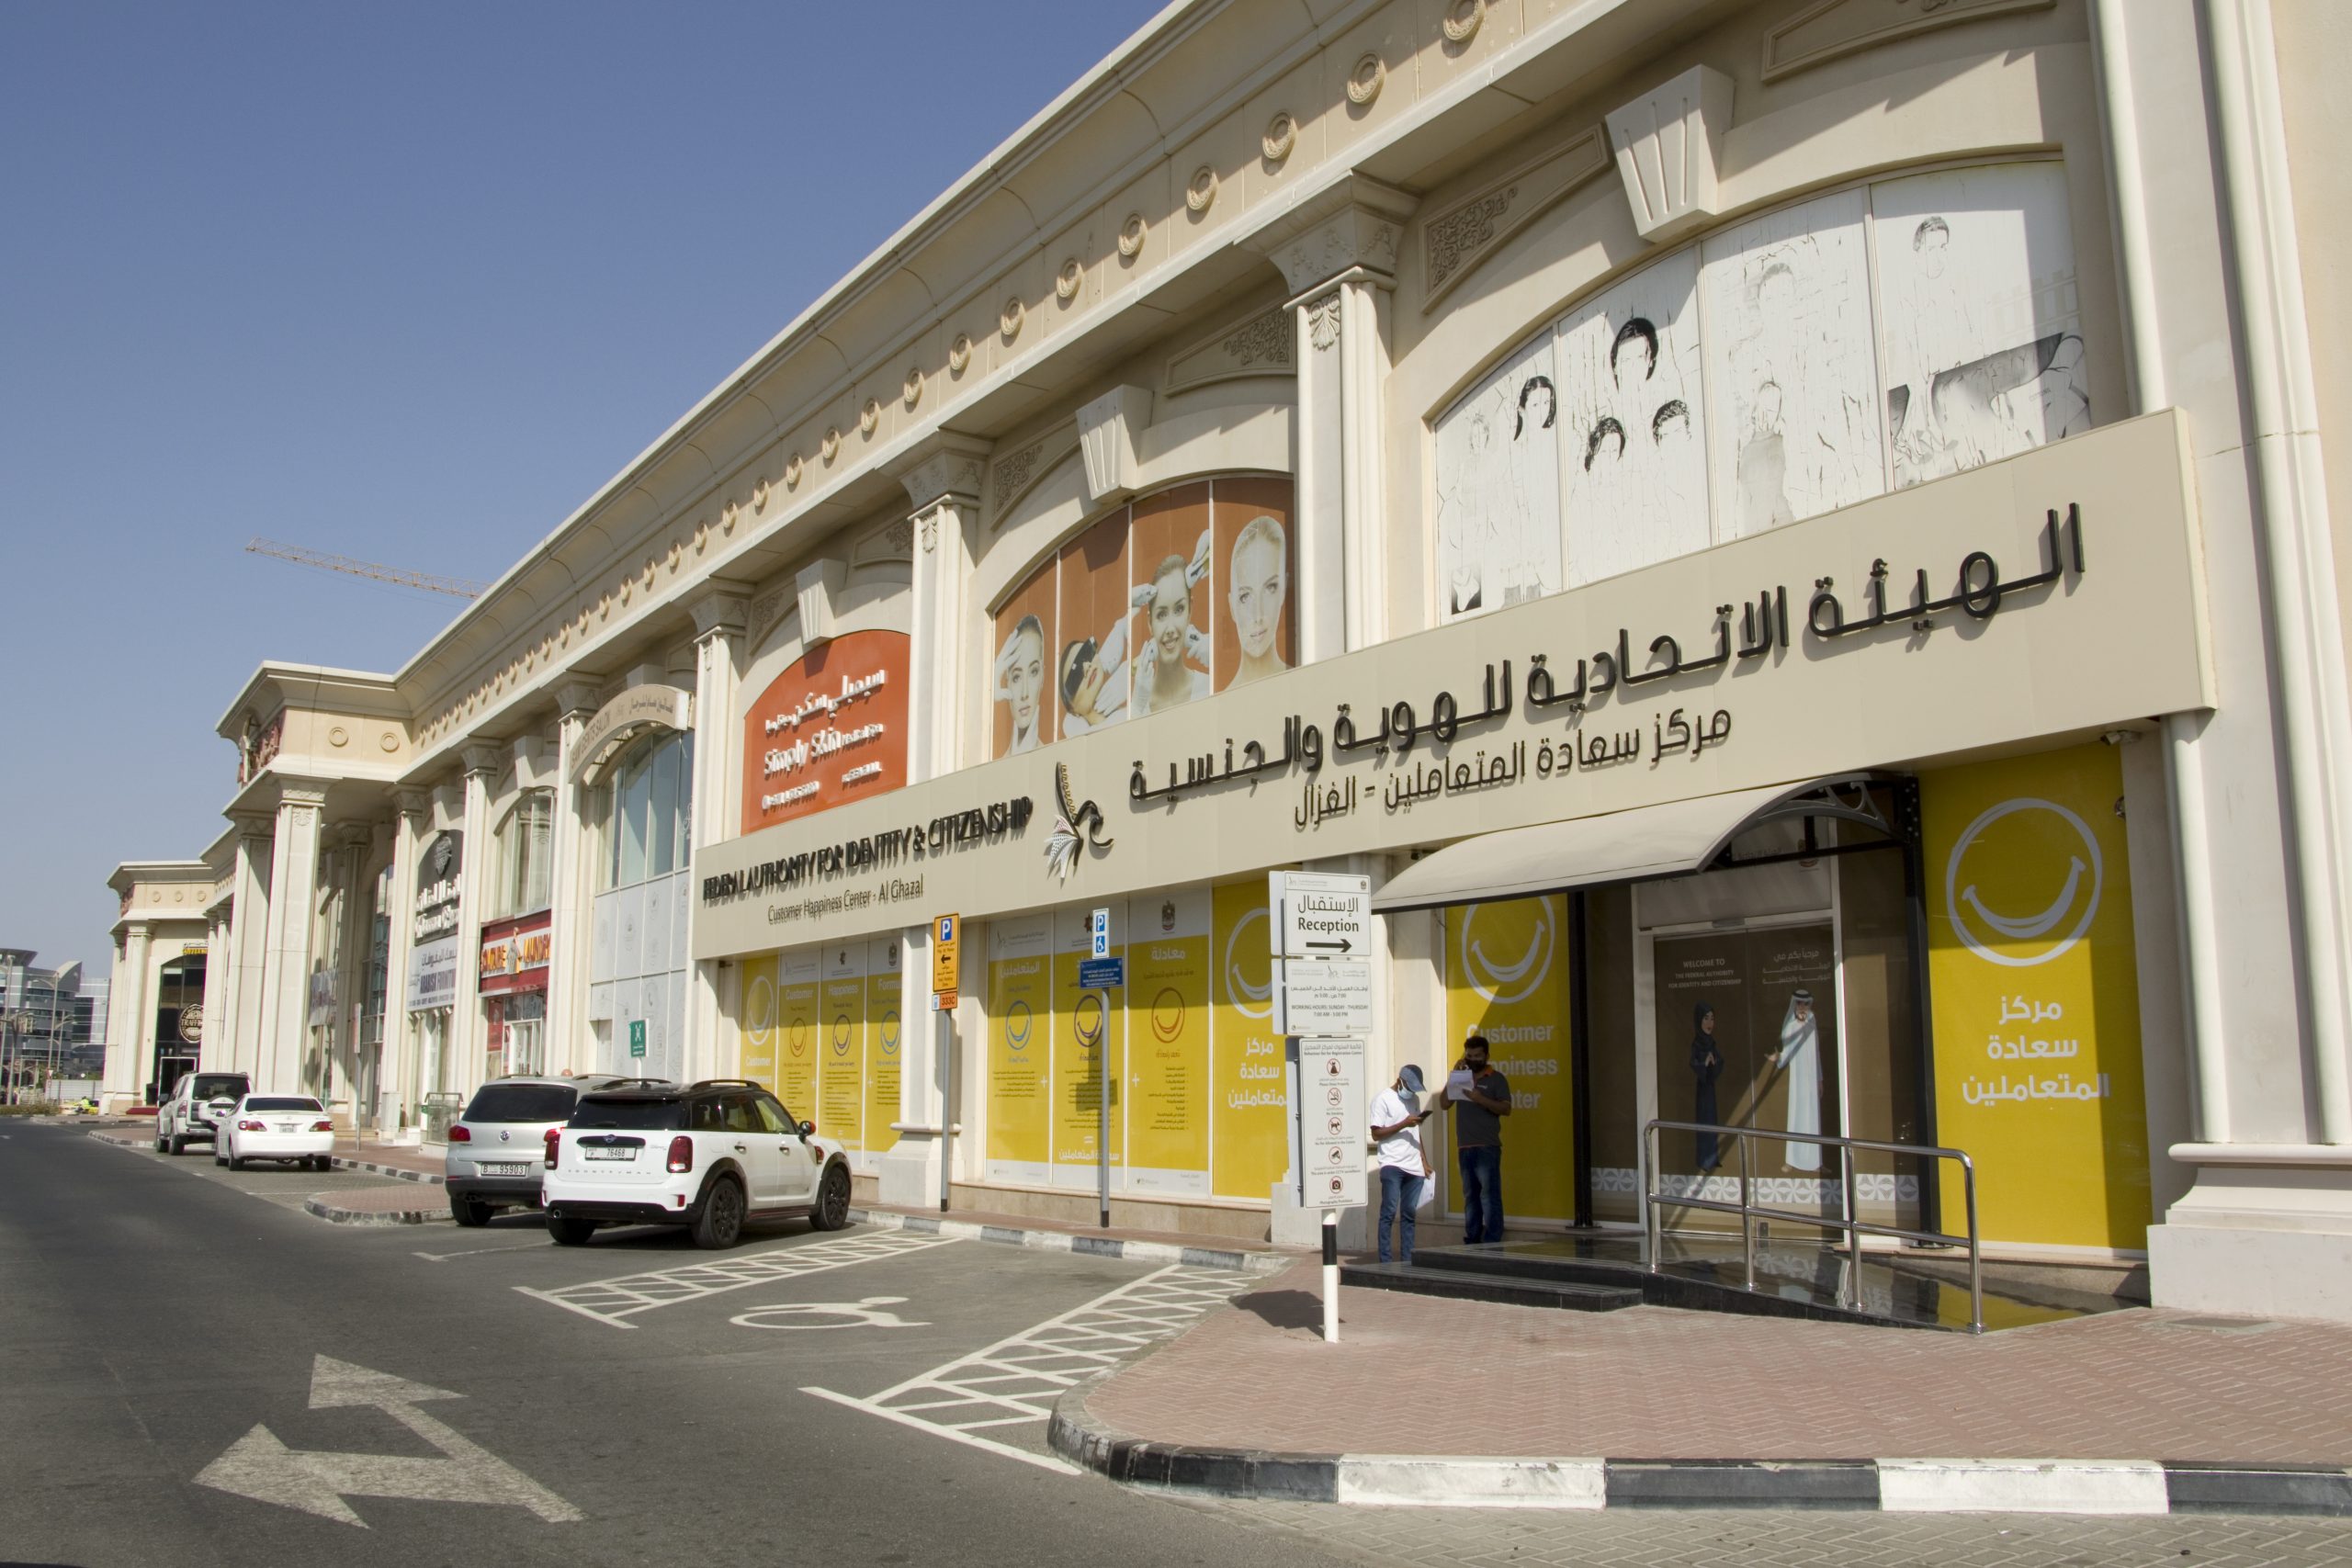 ghazal mall emirates id centre